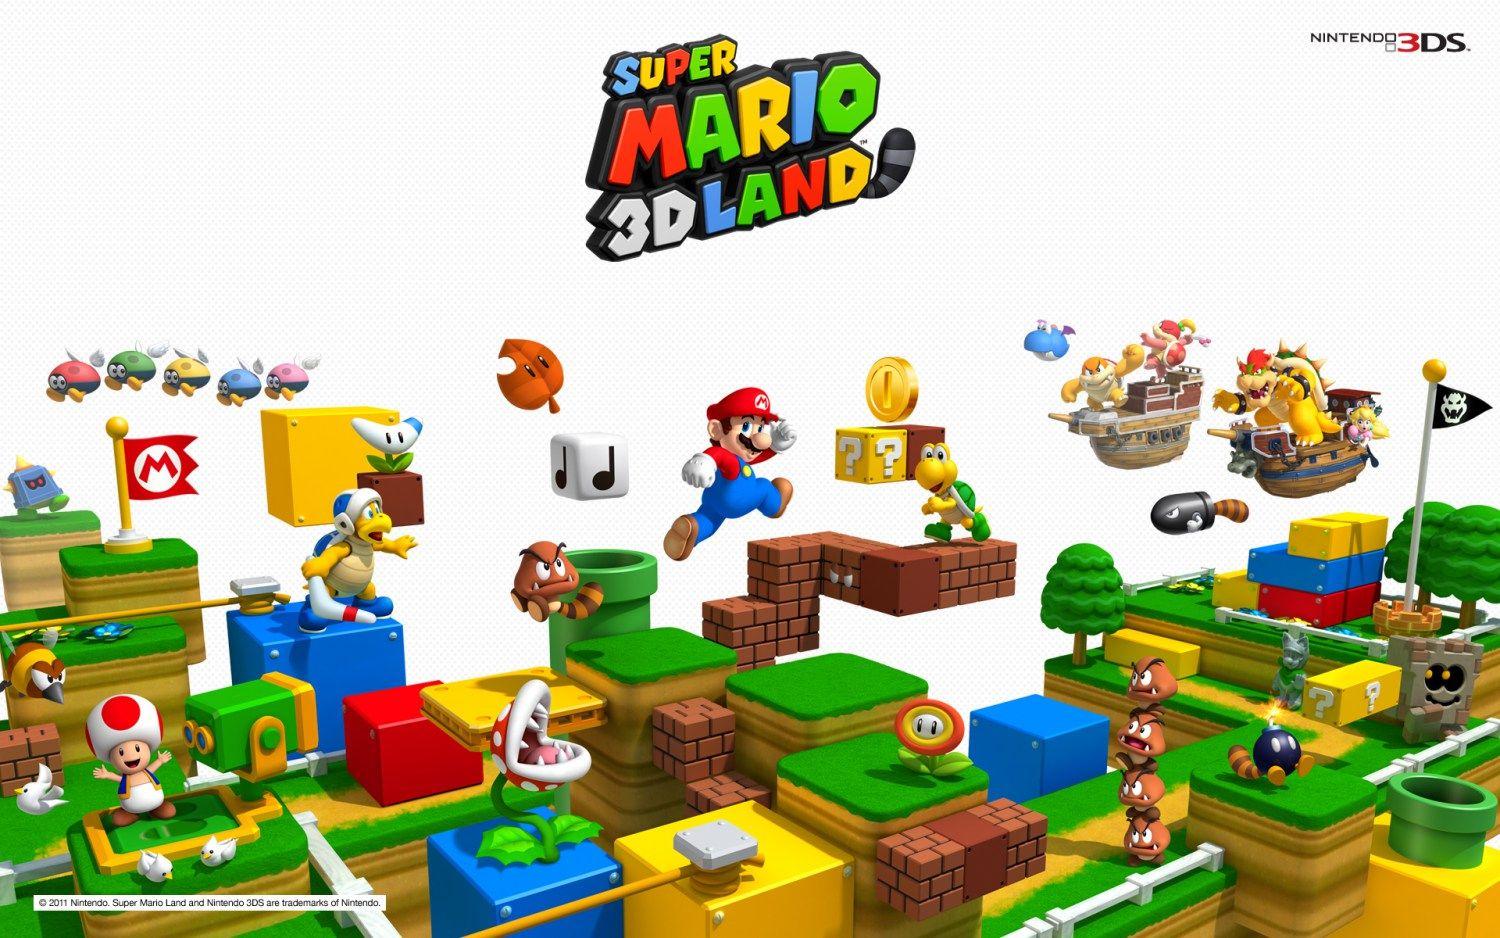 Super Mario 3D Land Wallpaper added